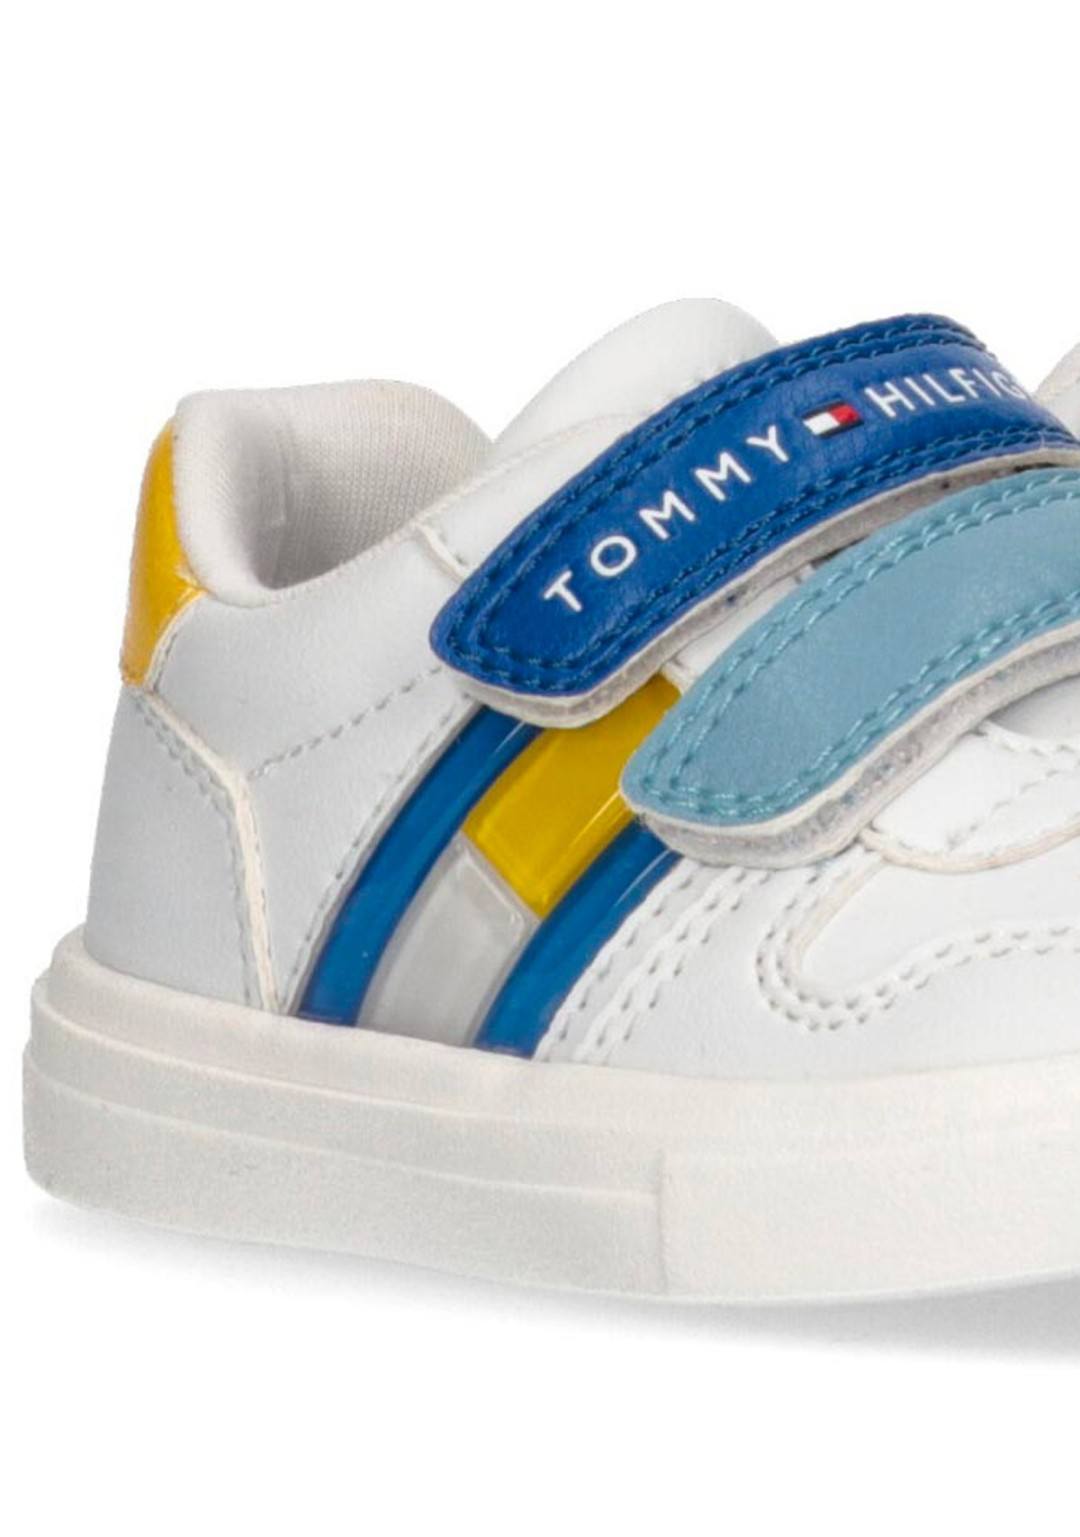 TOMMY HILFIGER - Sneaker Blu/Giallo - Bimbo - T1B9-32842